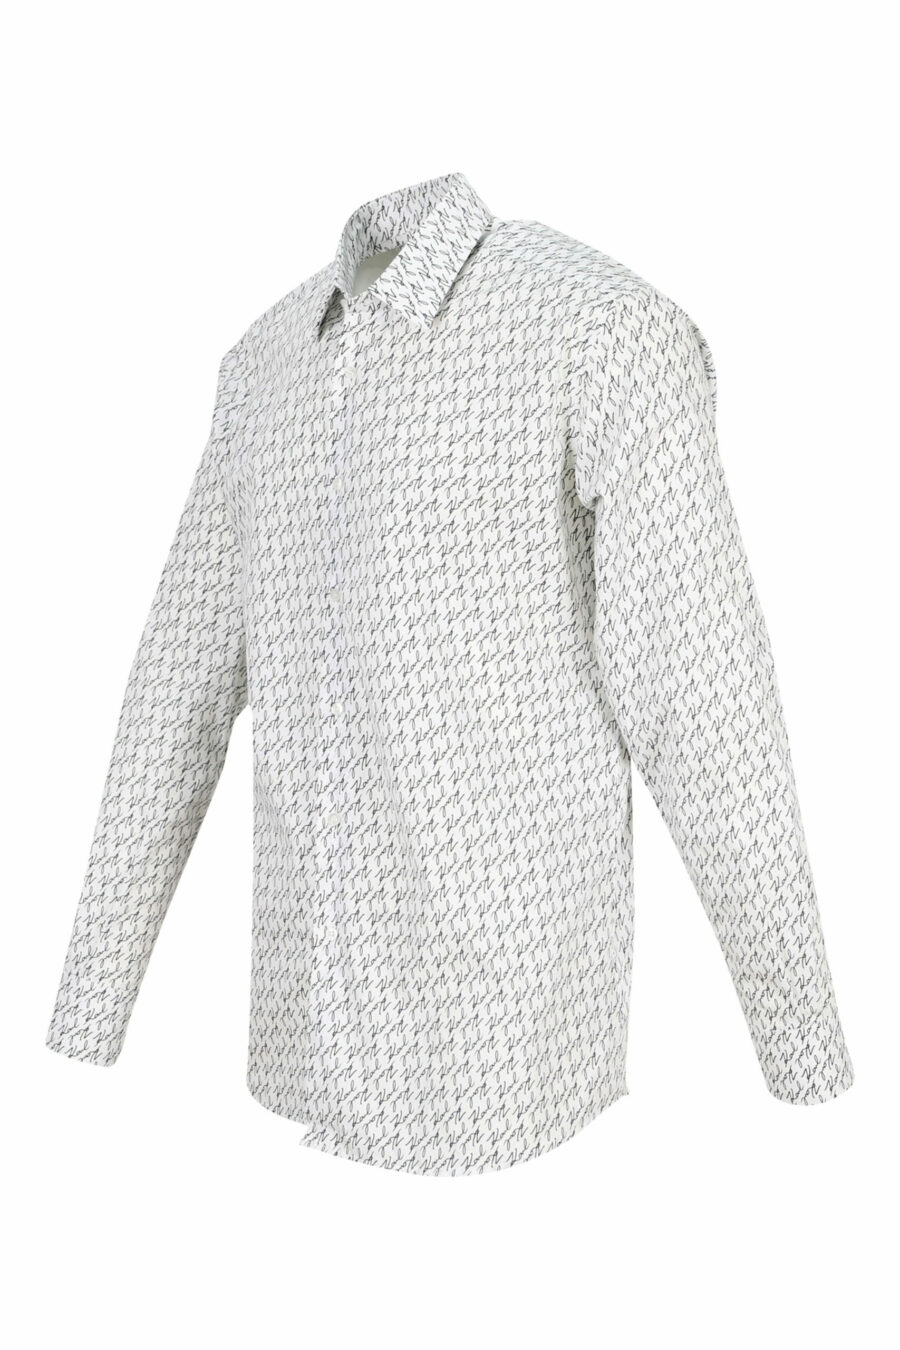 White shirt with black monogram - 4062226384438 1 scaled